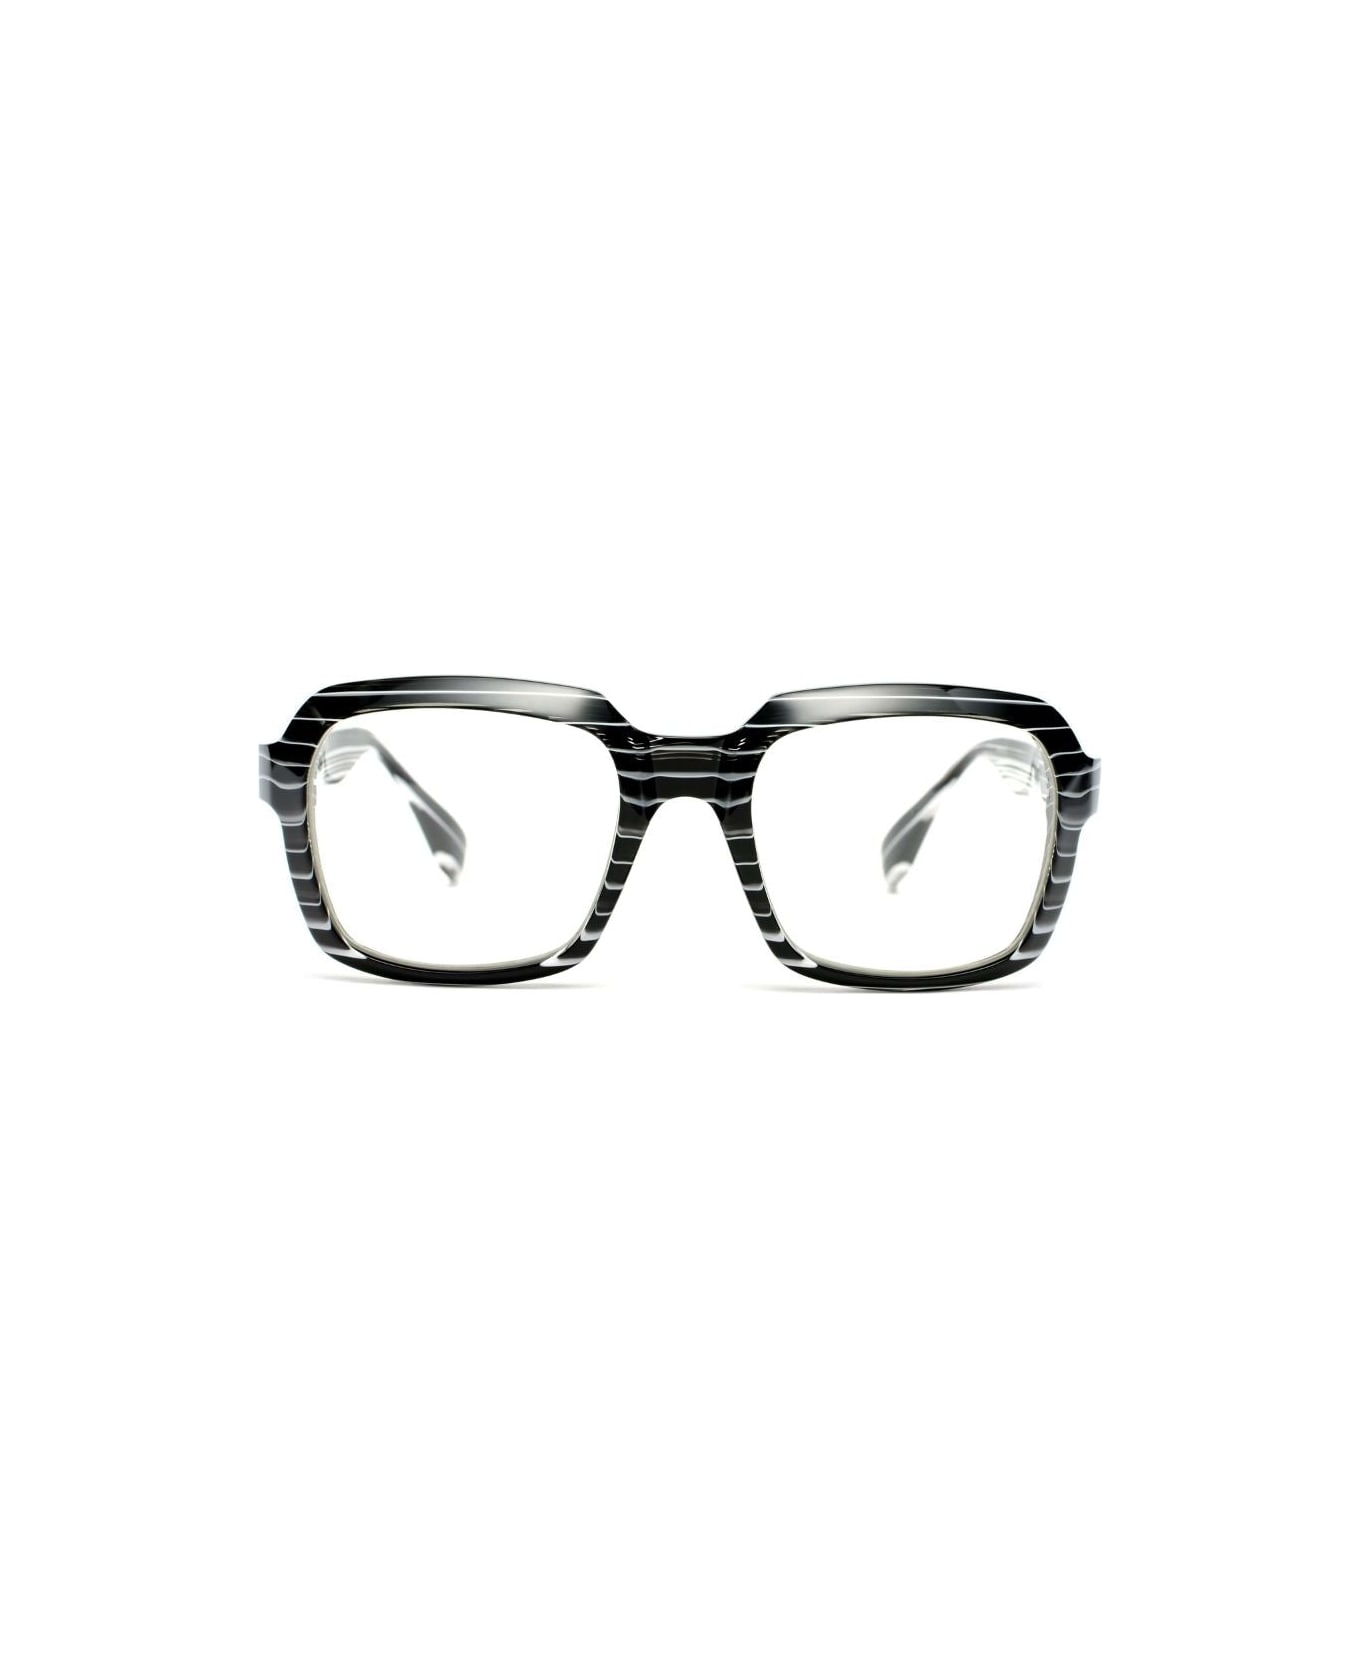 FACTORY900 Rf 014 083 Glasses - Black